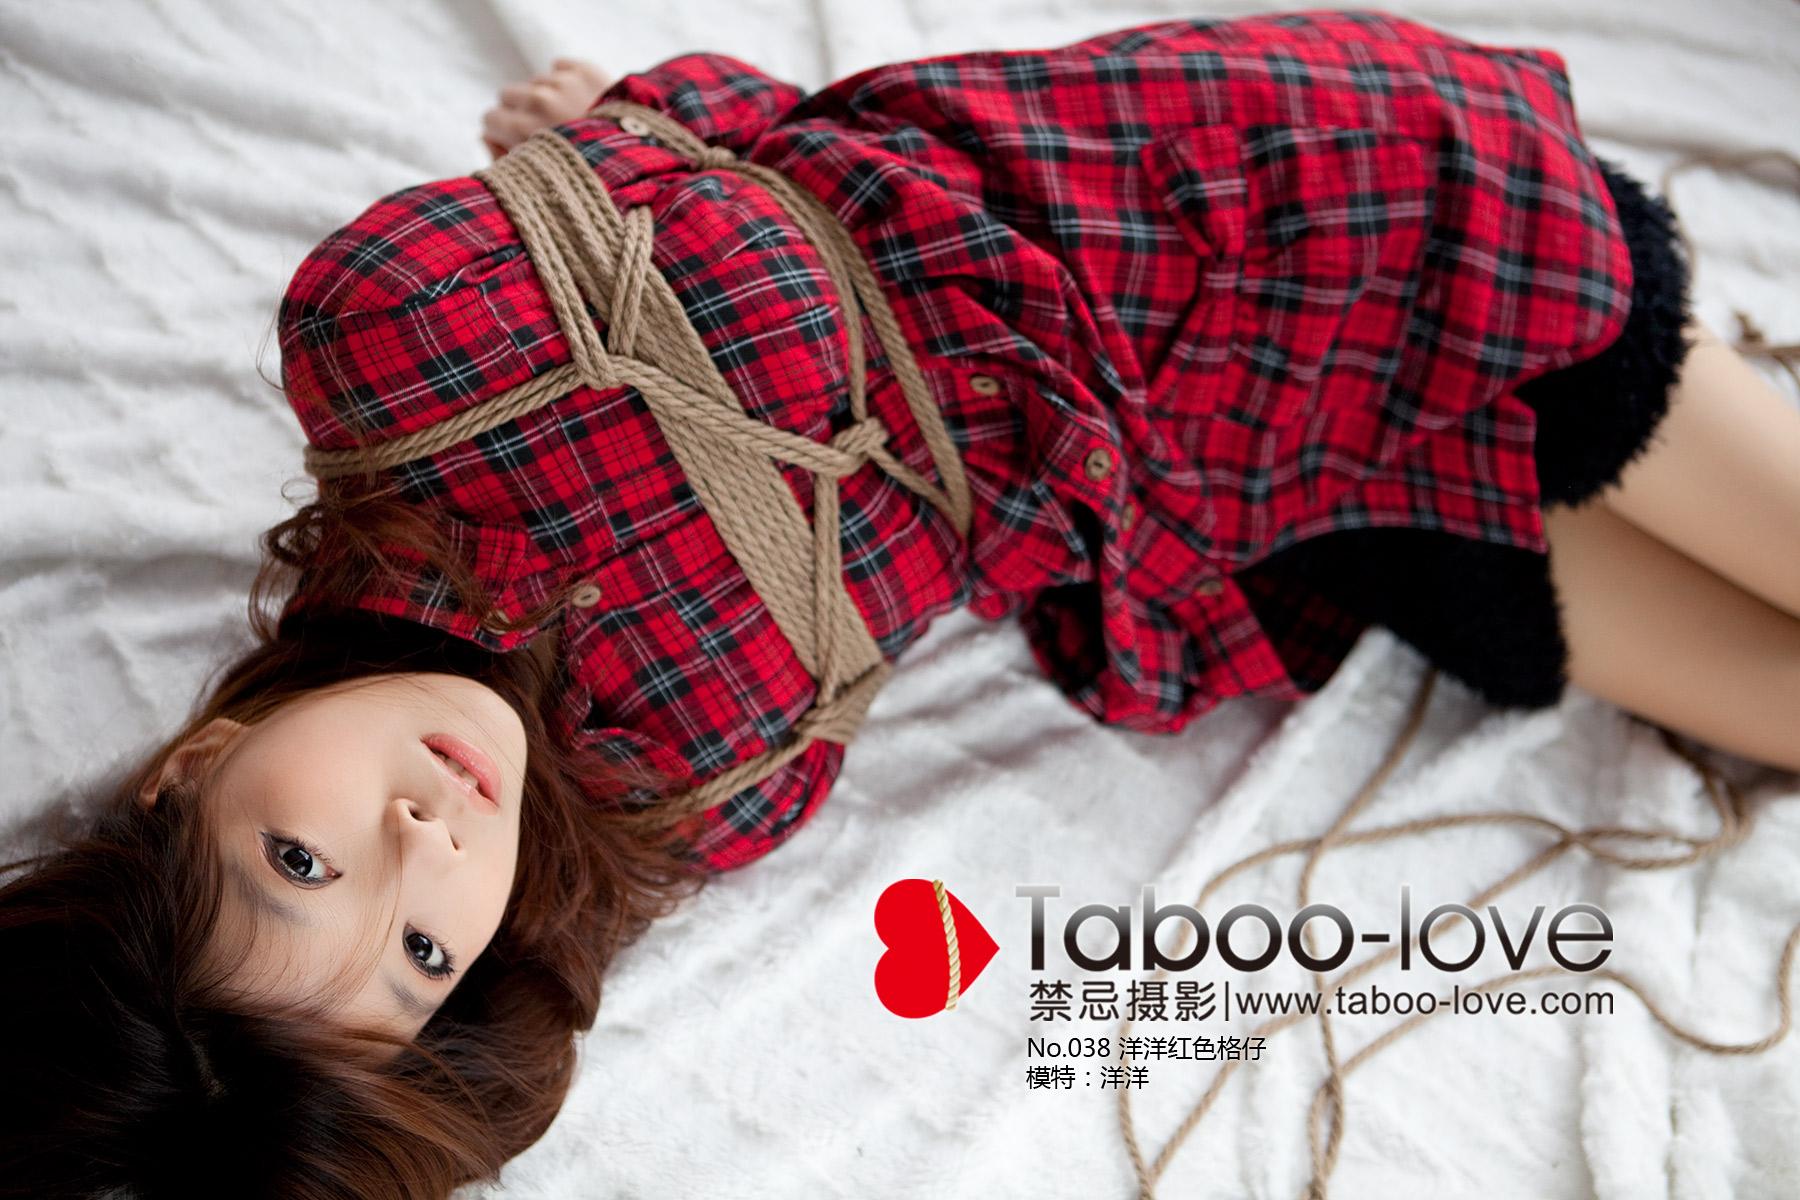 Taboo-love NO.038 洋洋 红色格仔 禁忌攝影 - 1.jpg